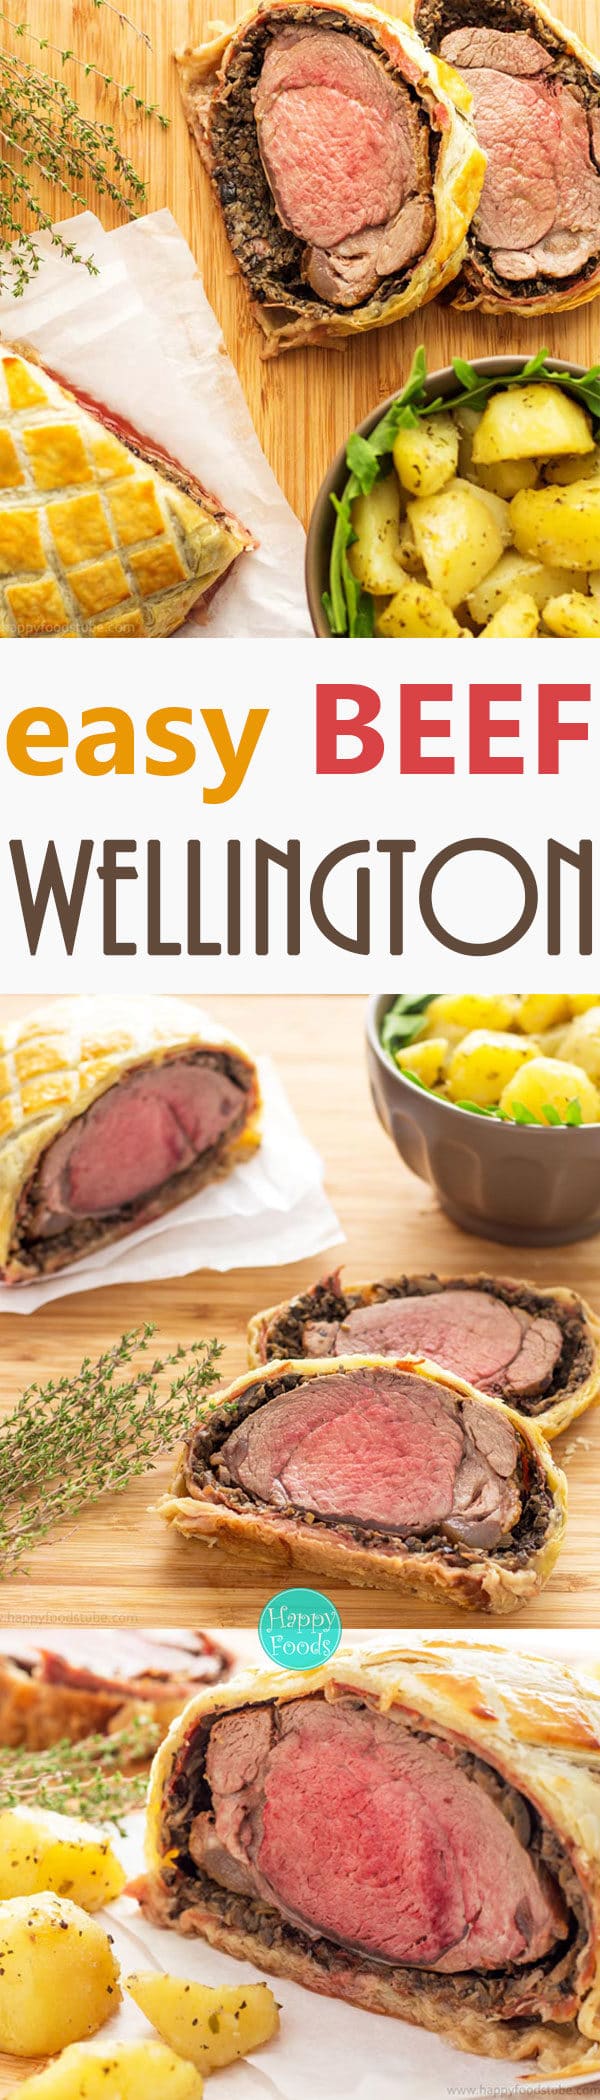 Easy Beef Wellington with Mushroom & Jamón - Fine Dining, Classical British Food, Home Cooking, Best Beef Wellington, Recipe | happyfoodstube.com